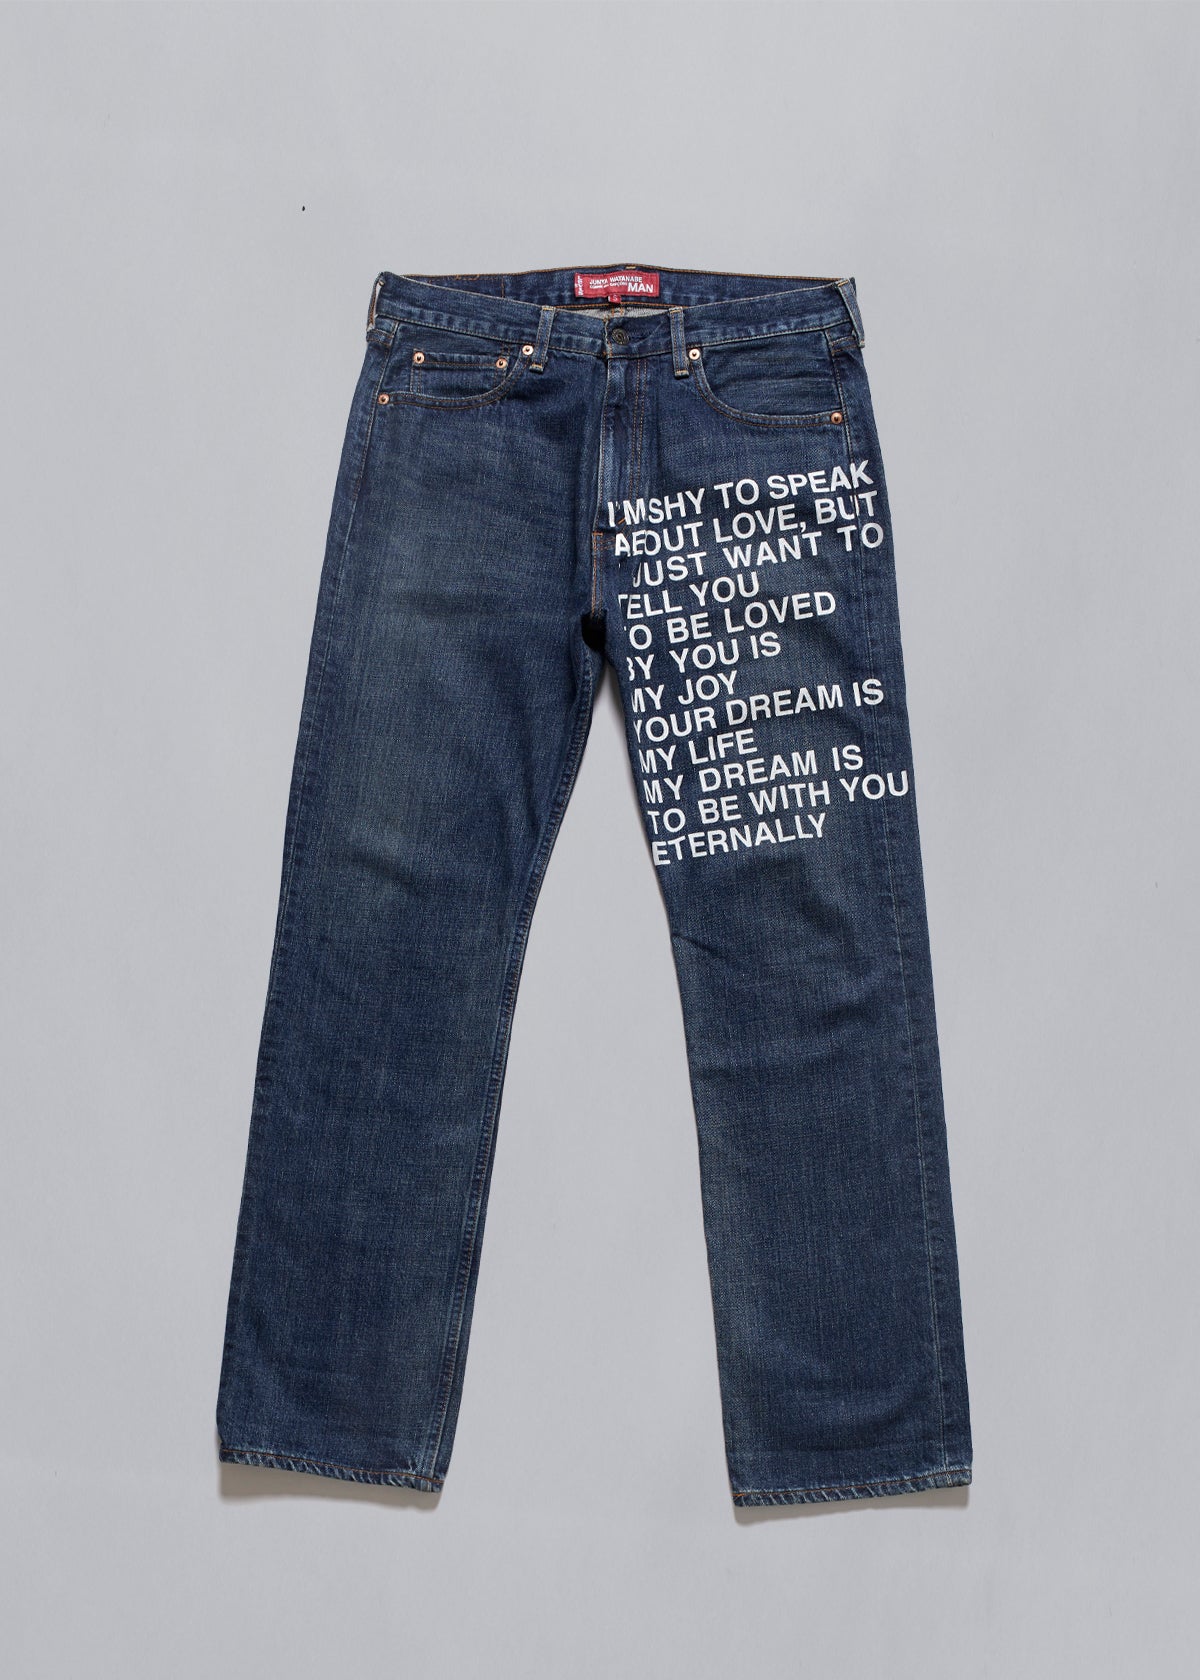 Junya Watanabe/Levi's 503 Poem Jeans SS2002 - 32 – The Archivist Store